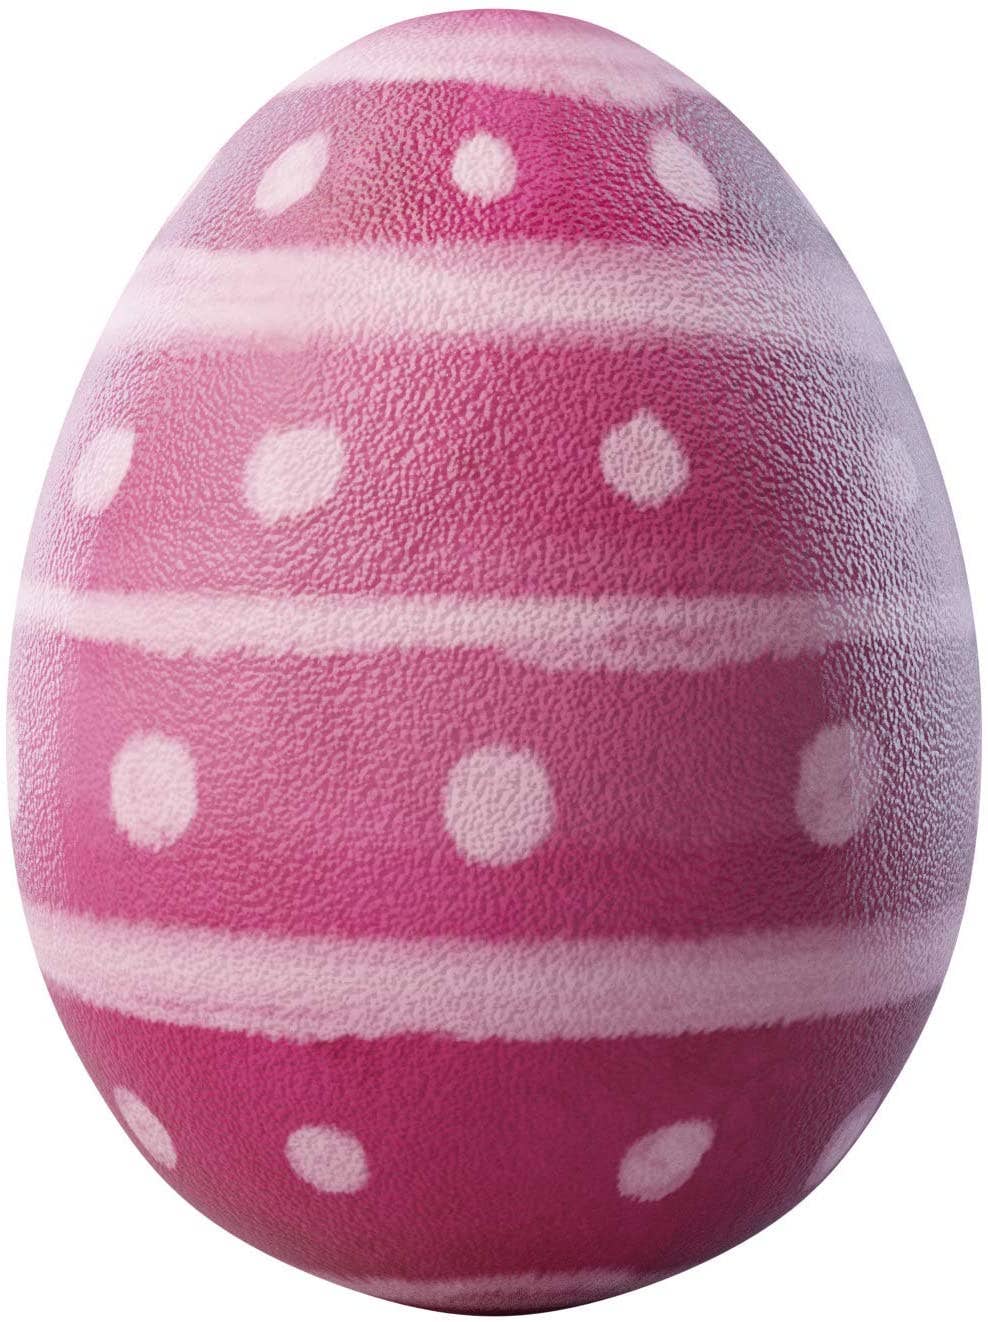 Paint 'N Play Squishy Eggs